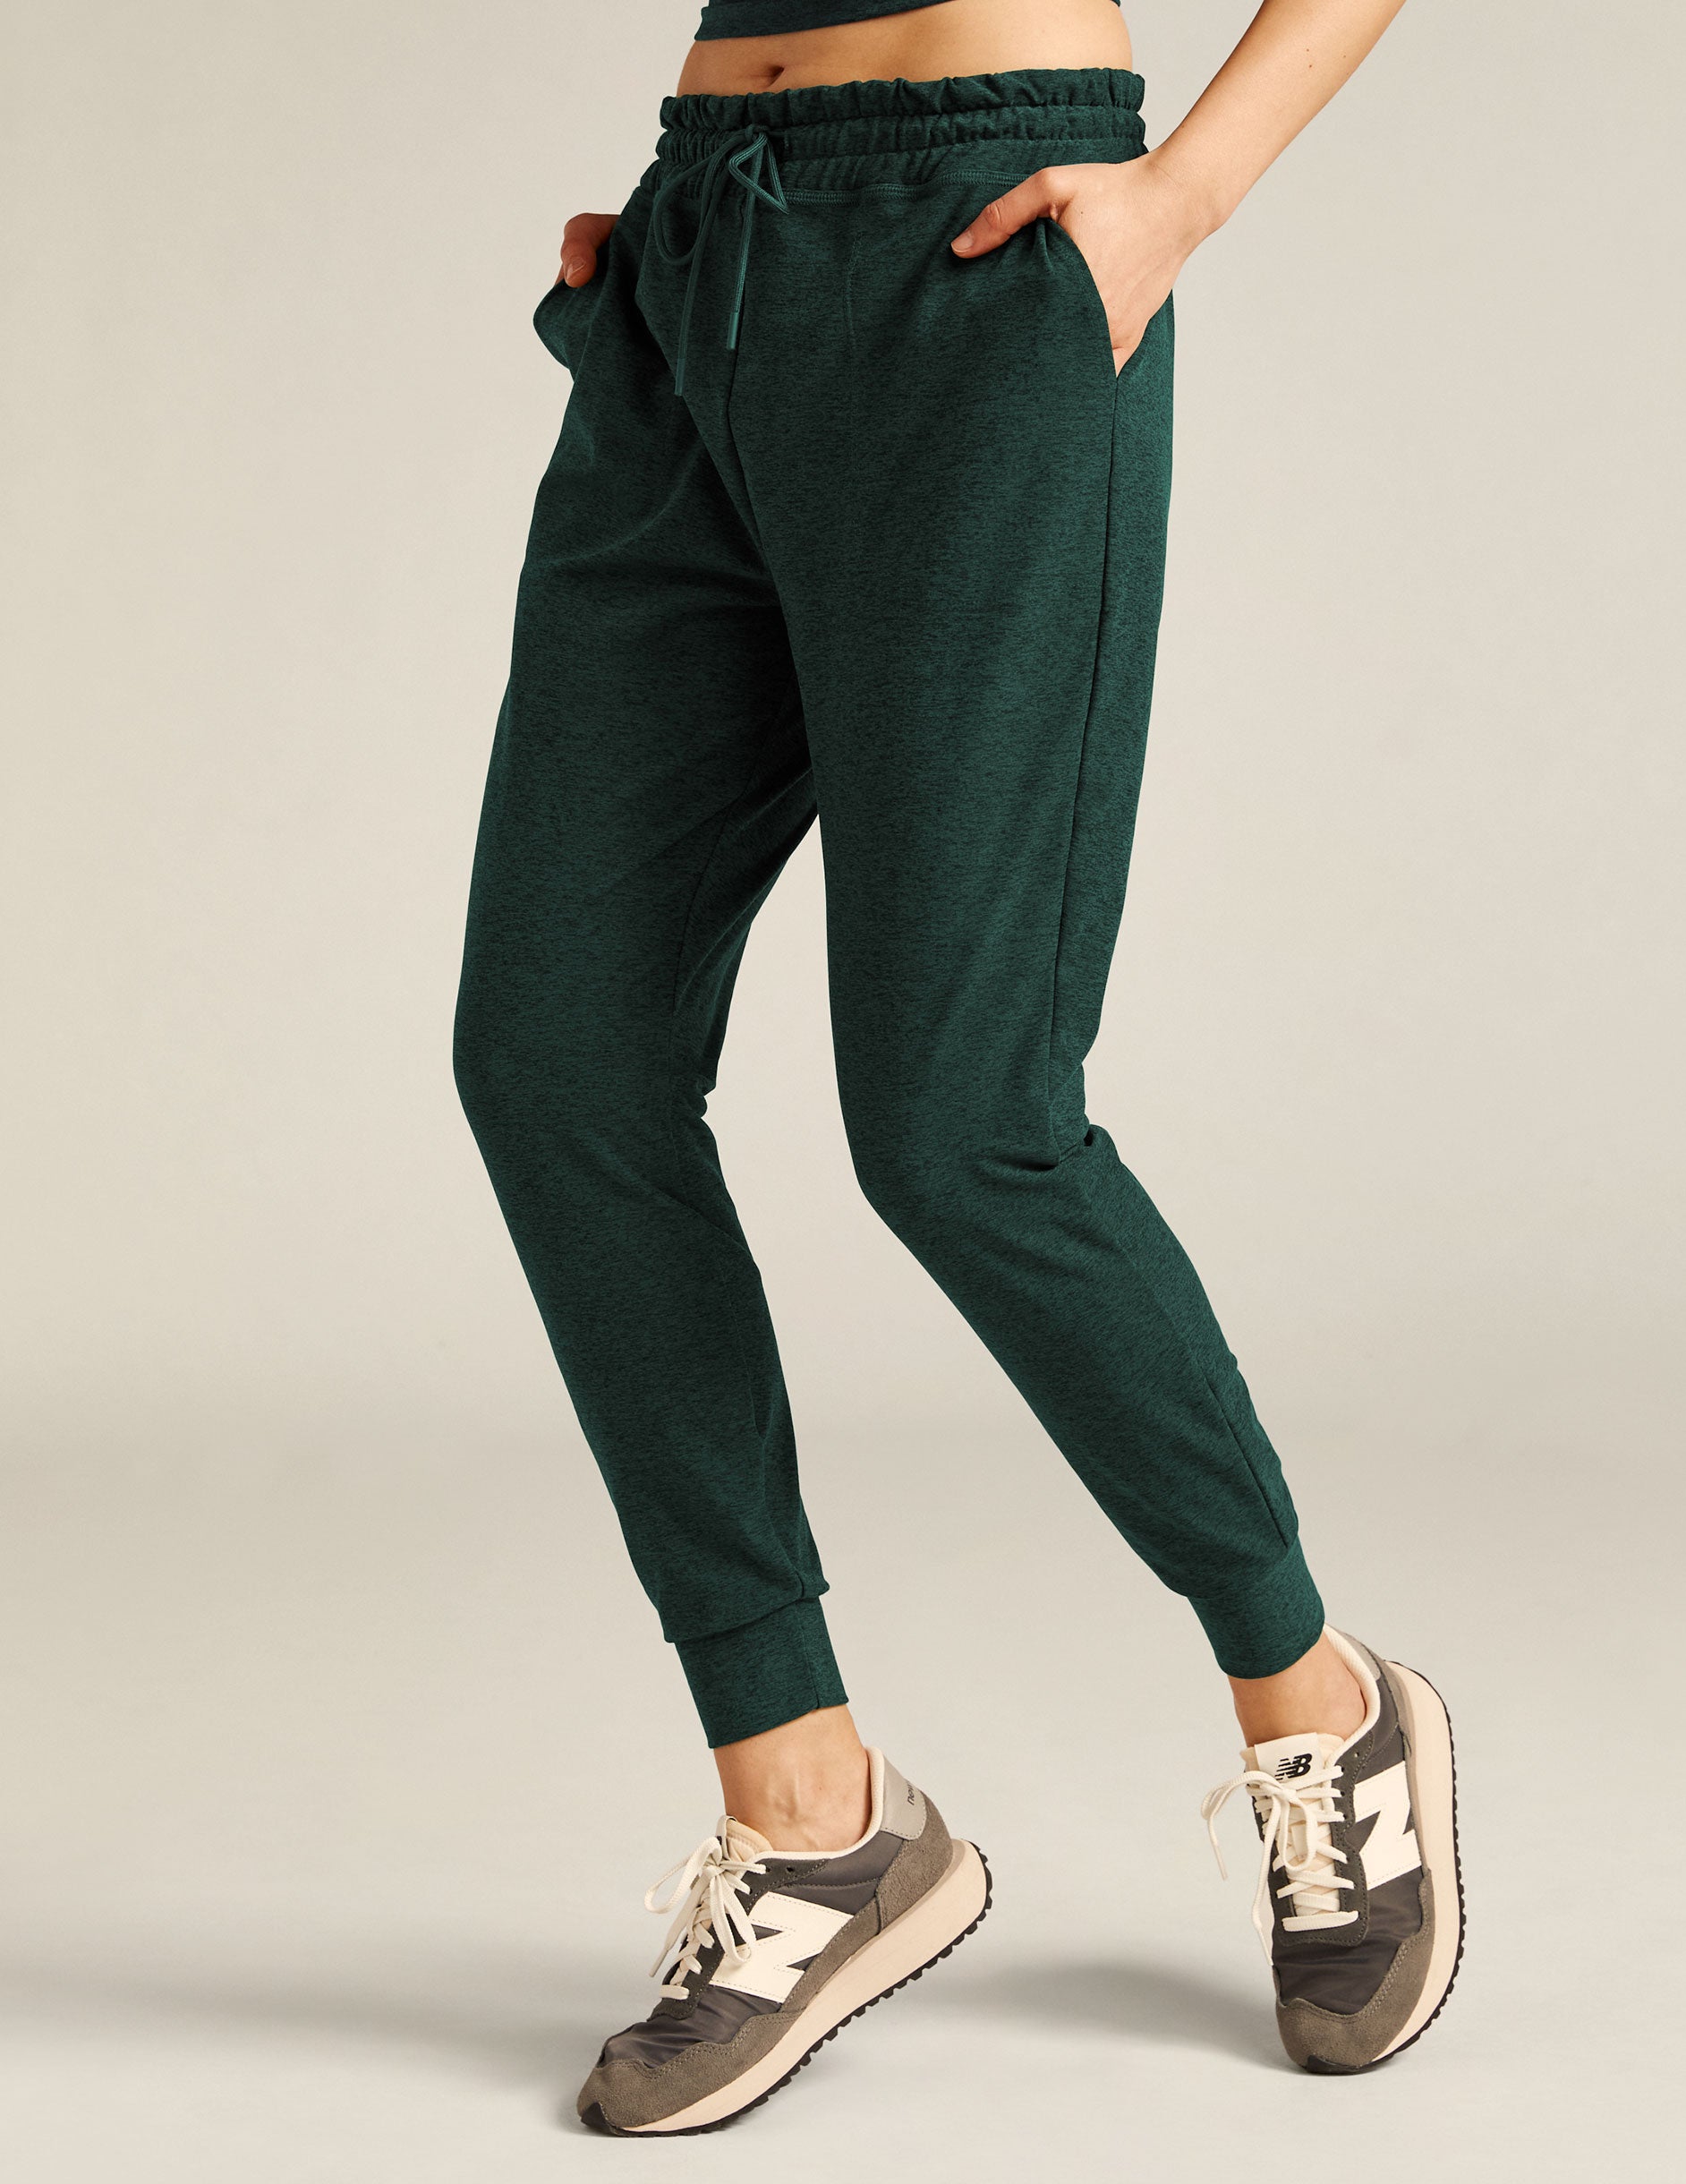 green midi pocket joggers with an elastic waistband and drawstring.